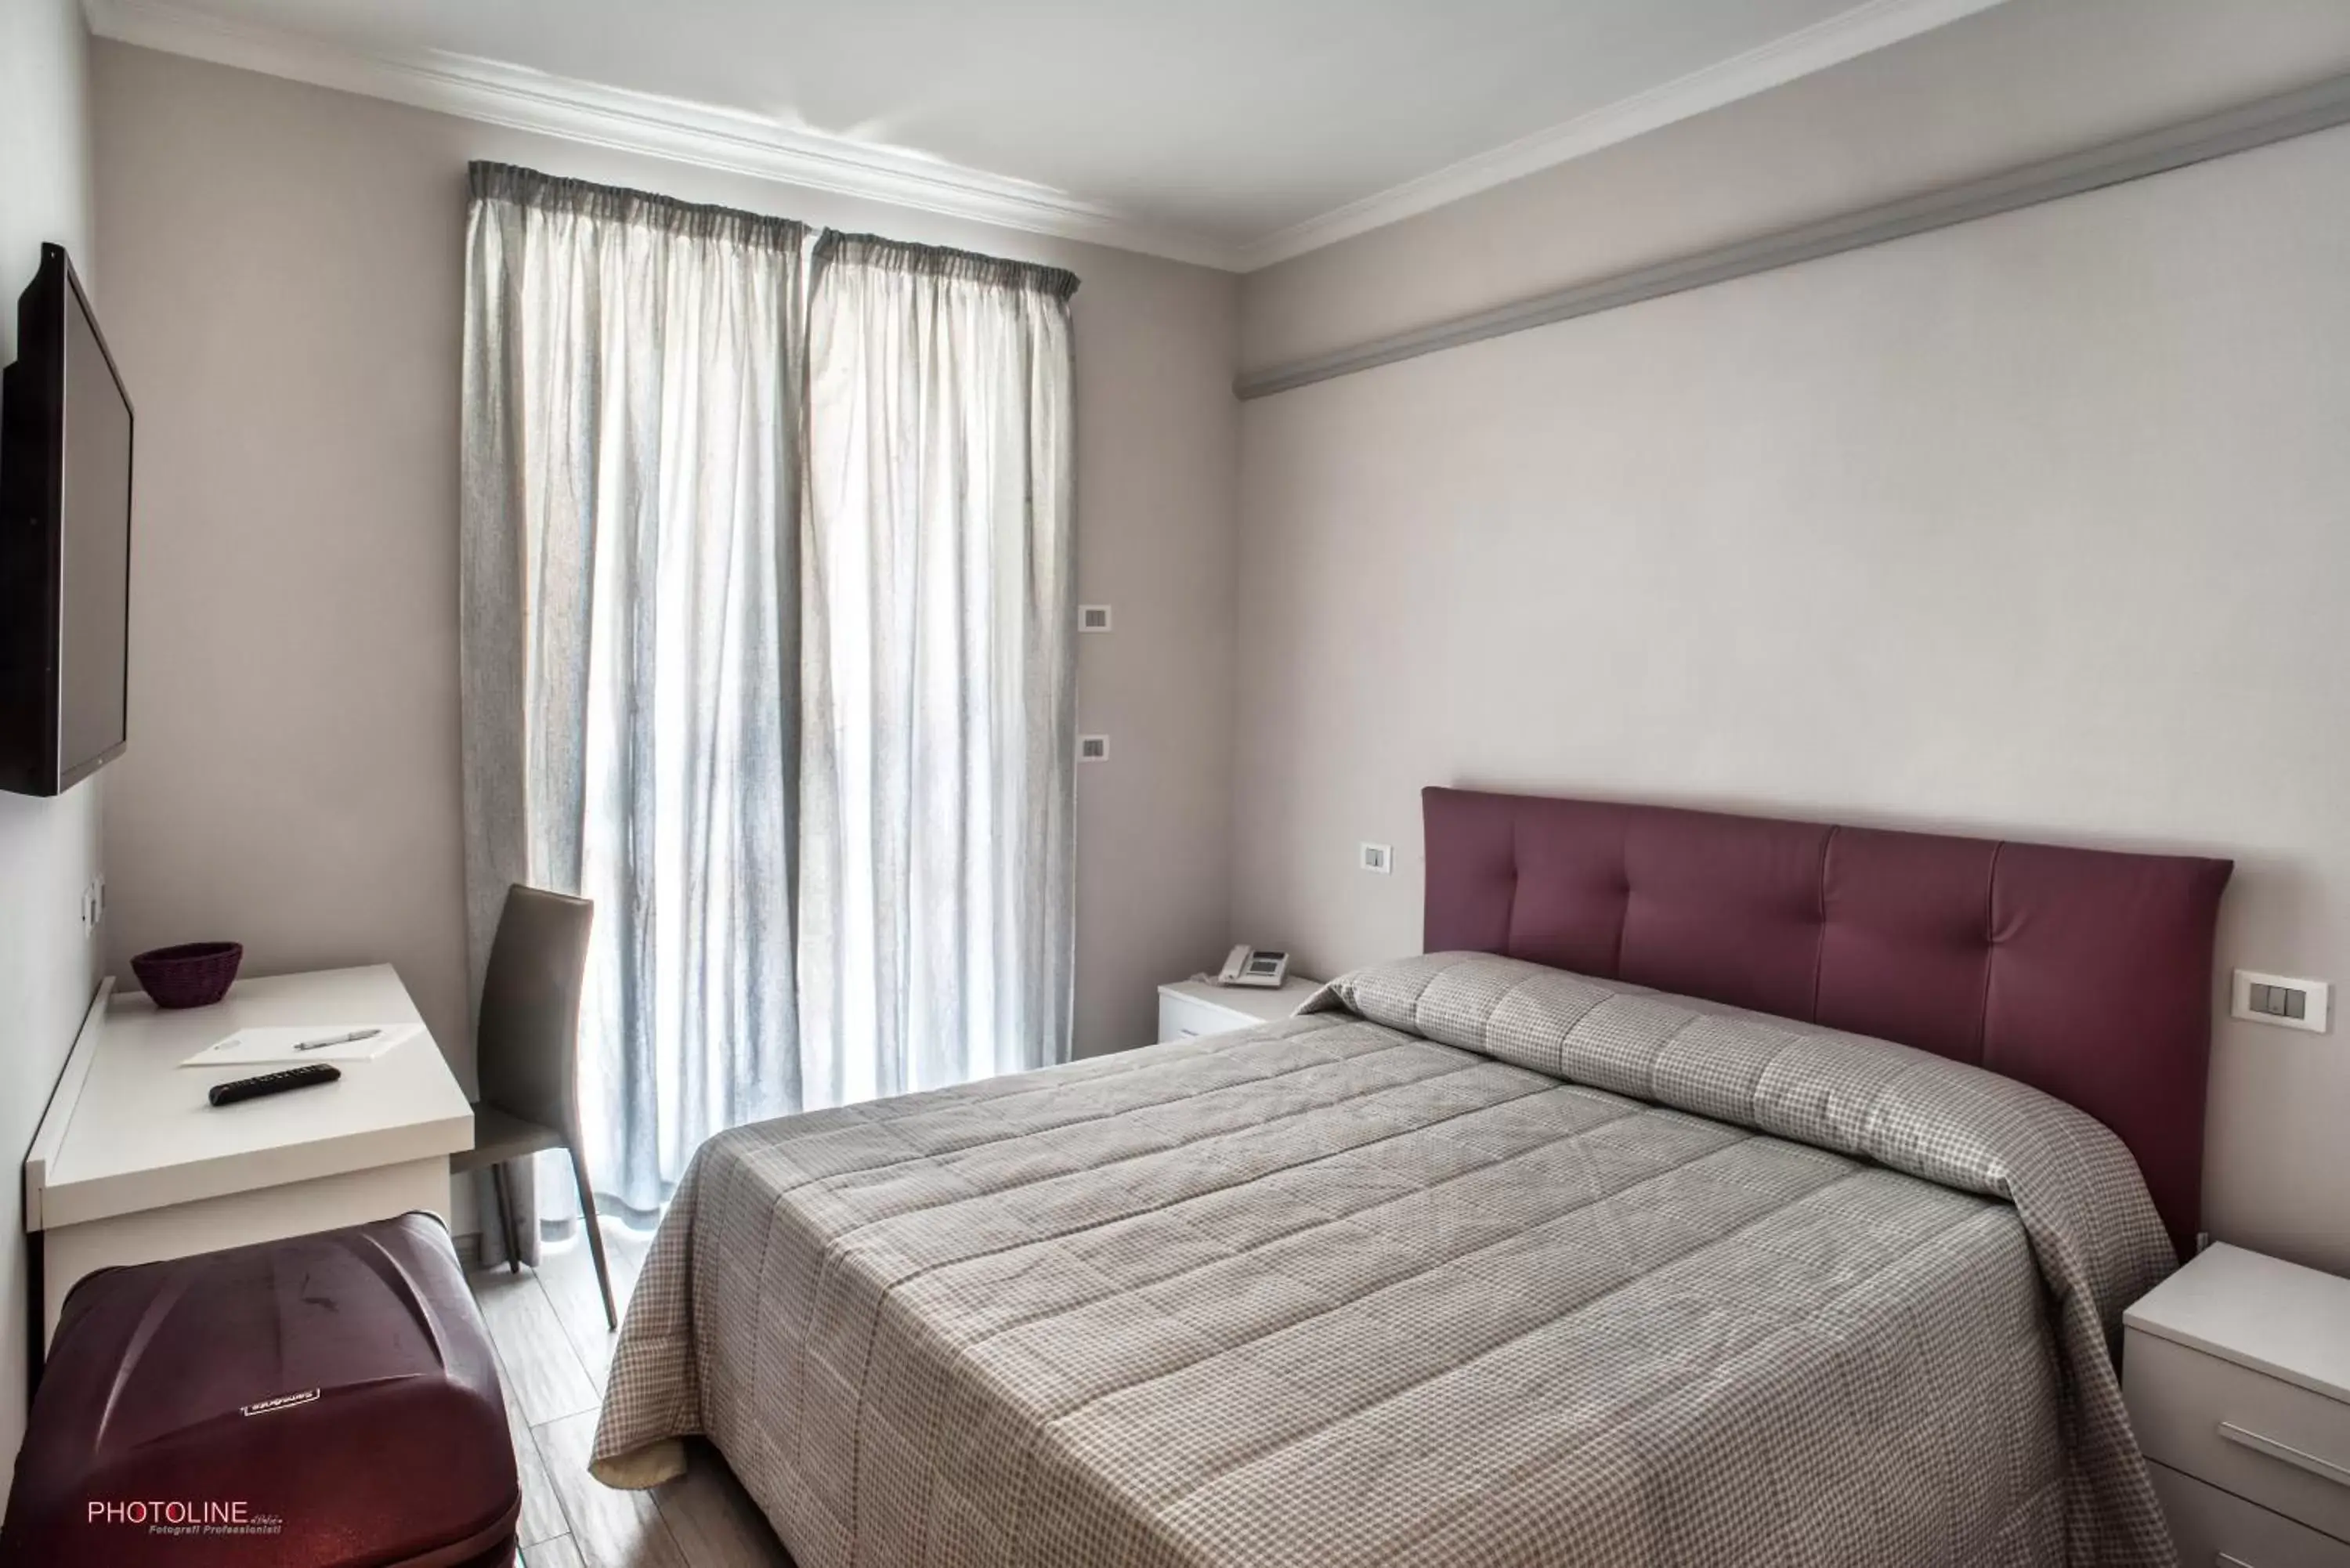 Bedroom, Room Photo in Hotel Villa Giulia